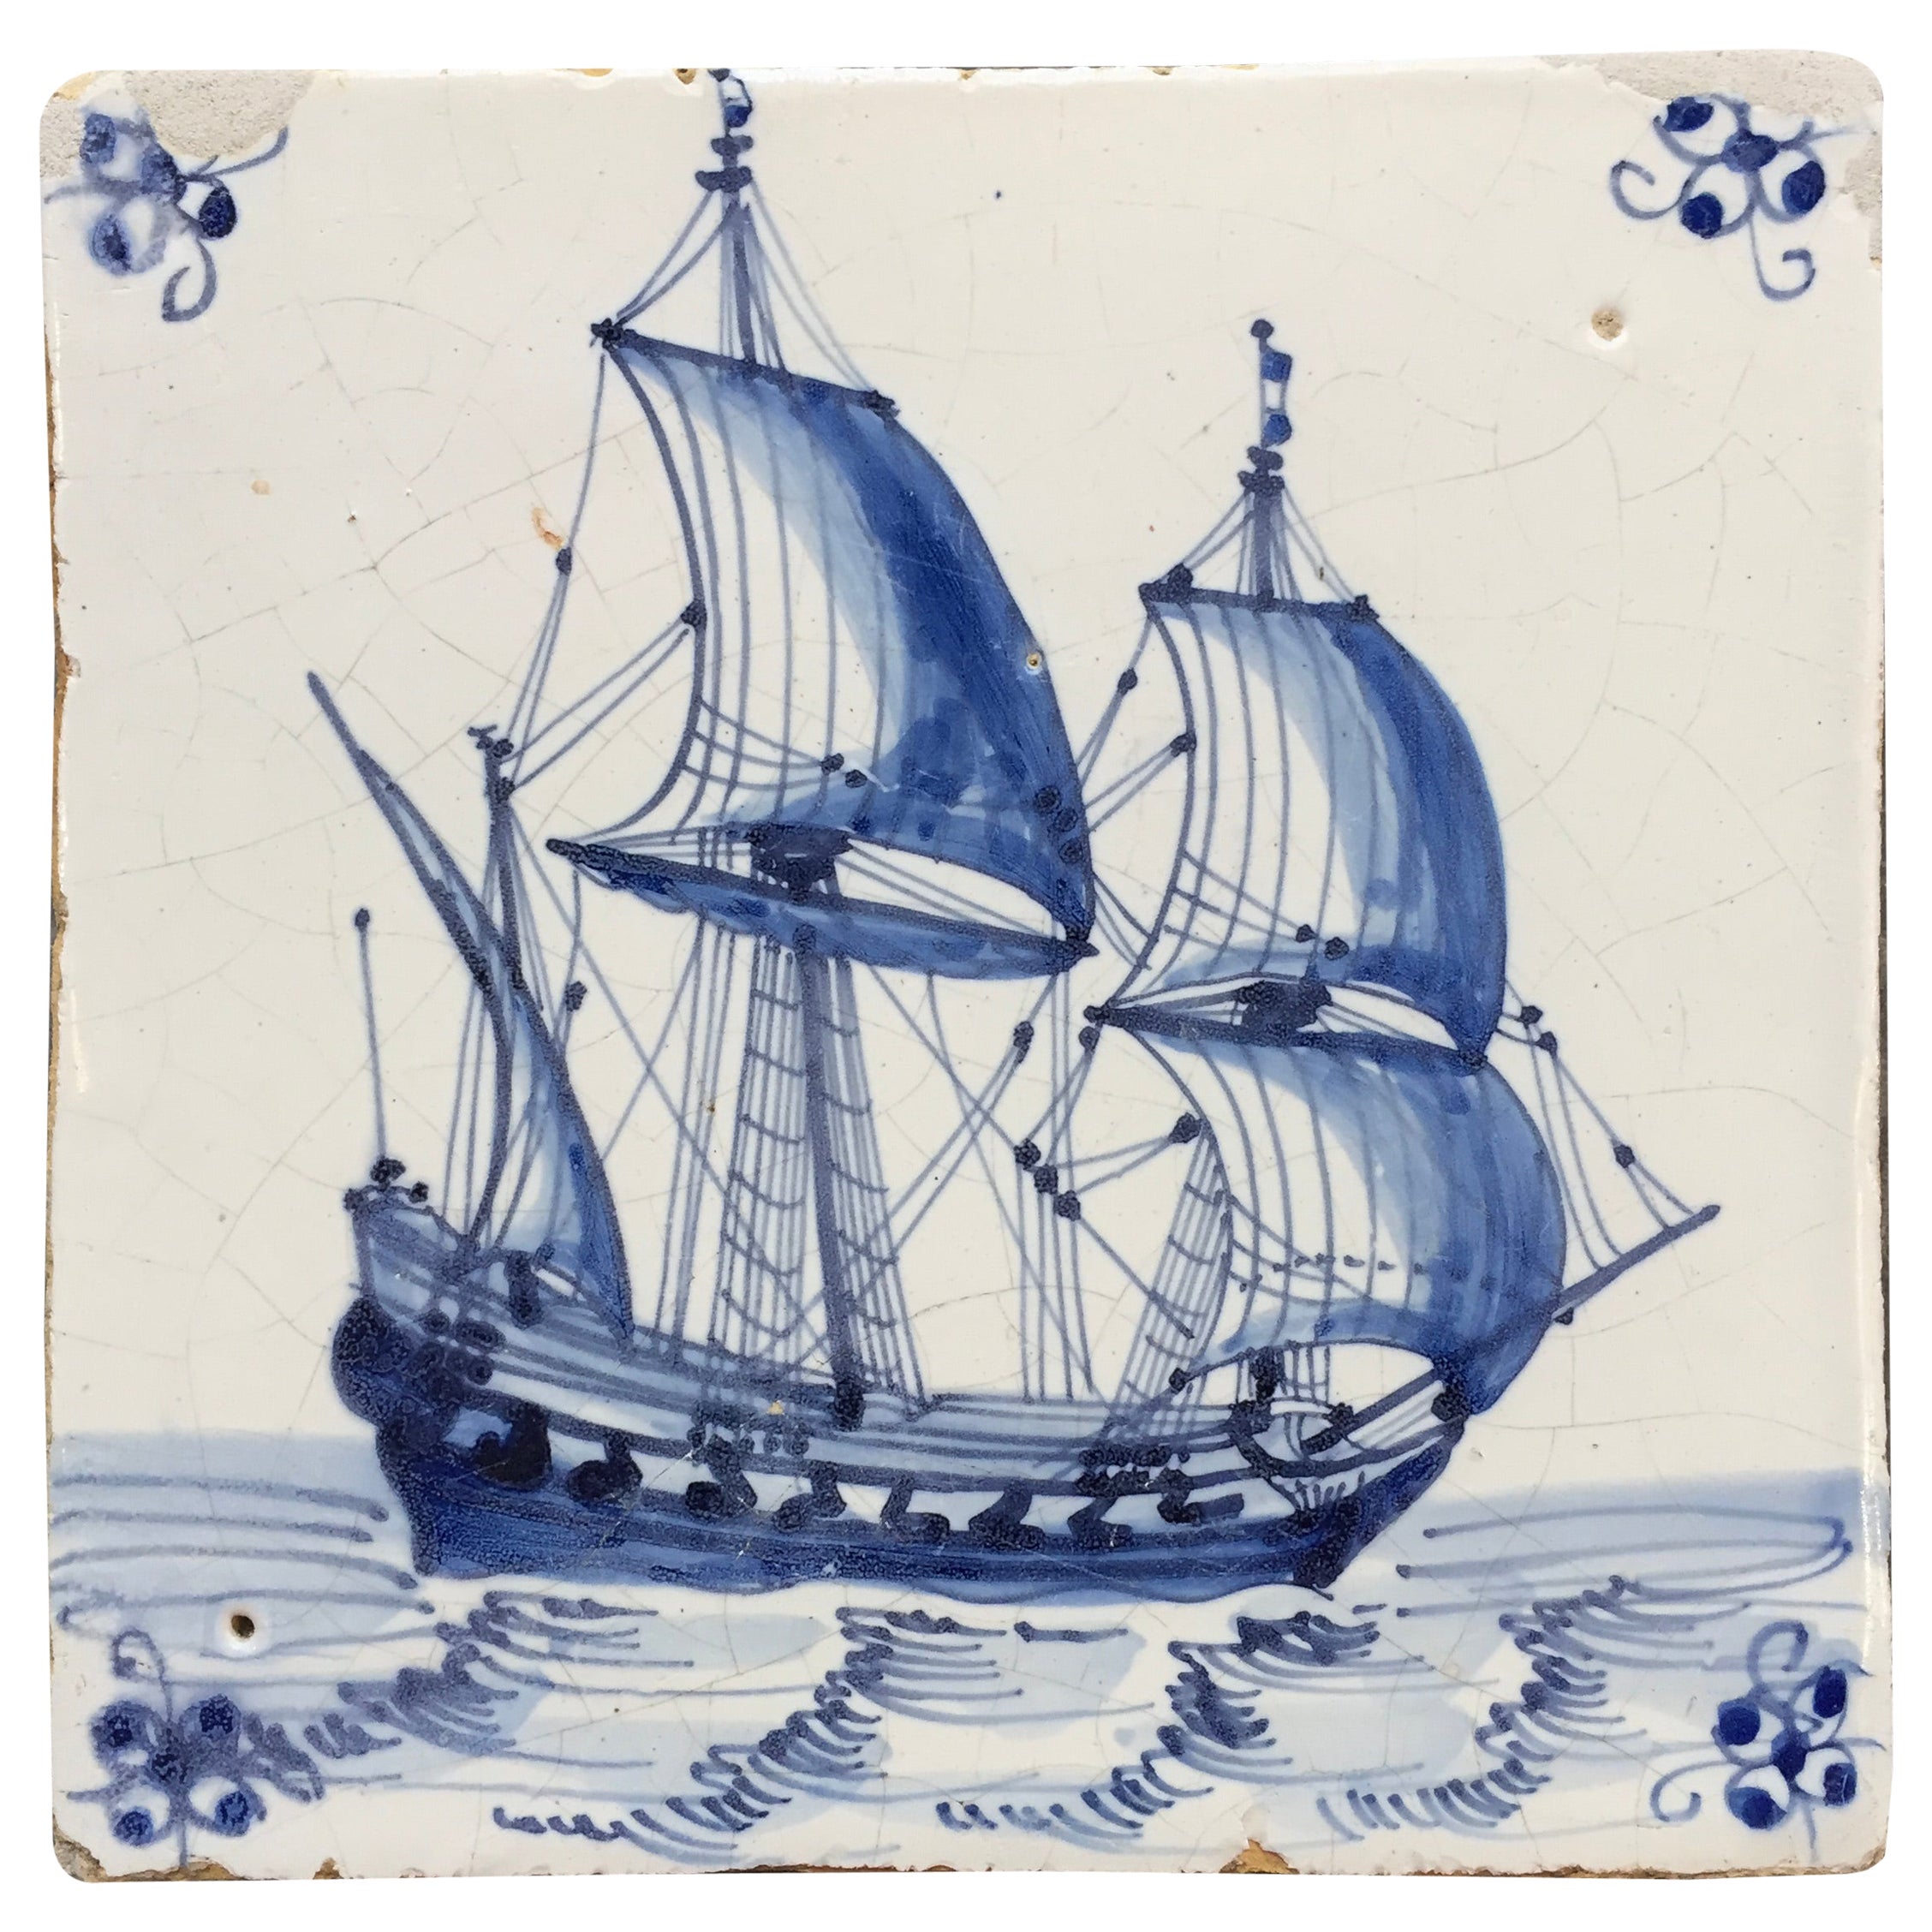 Rare Dutch Delft Tile with VOC Ship, Early 17th Century